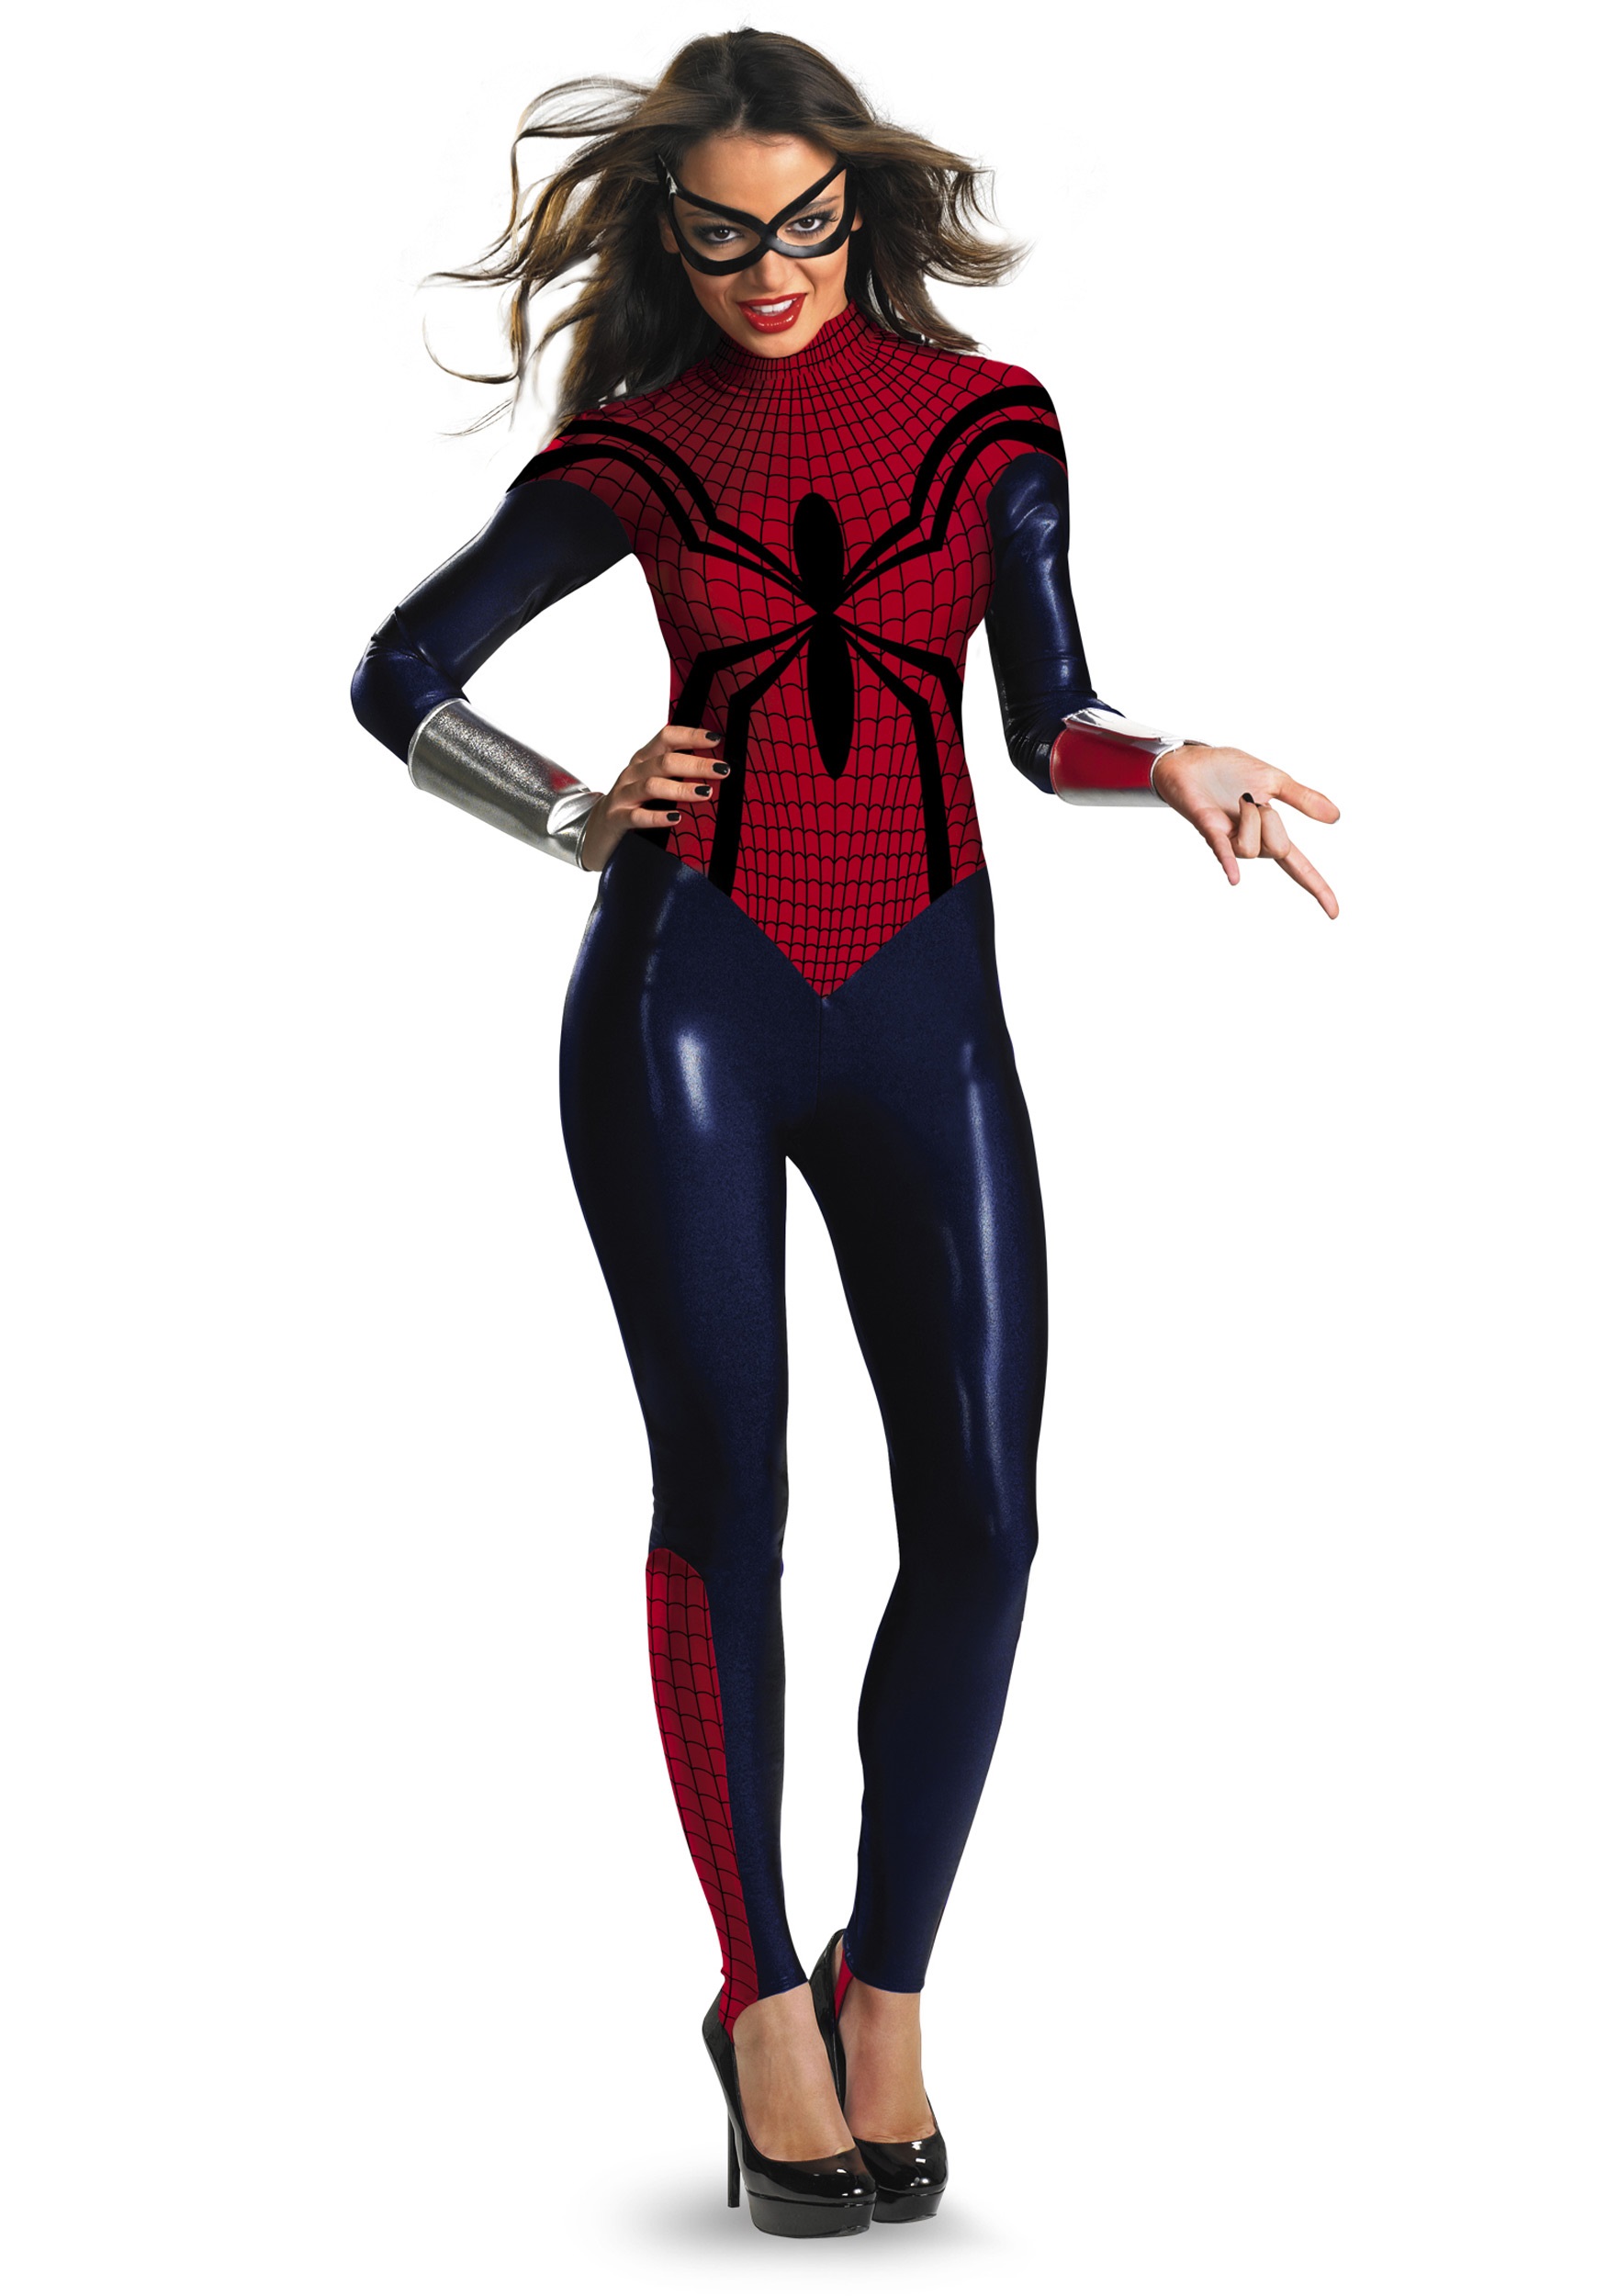 Spider Girl Bodysuit Adult Costume Halloween Costume